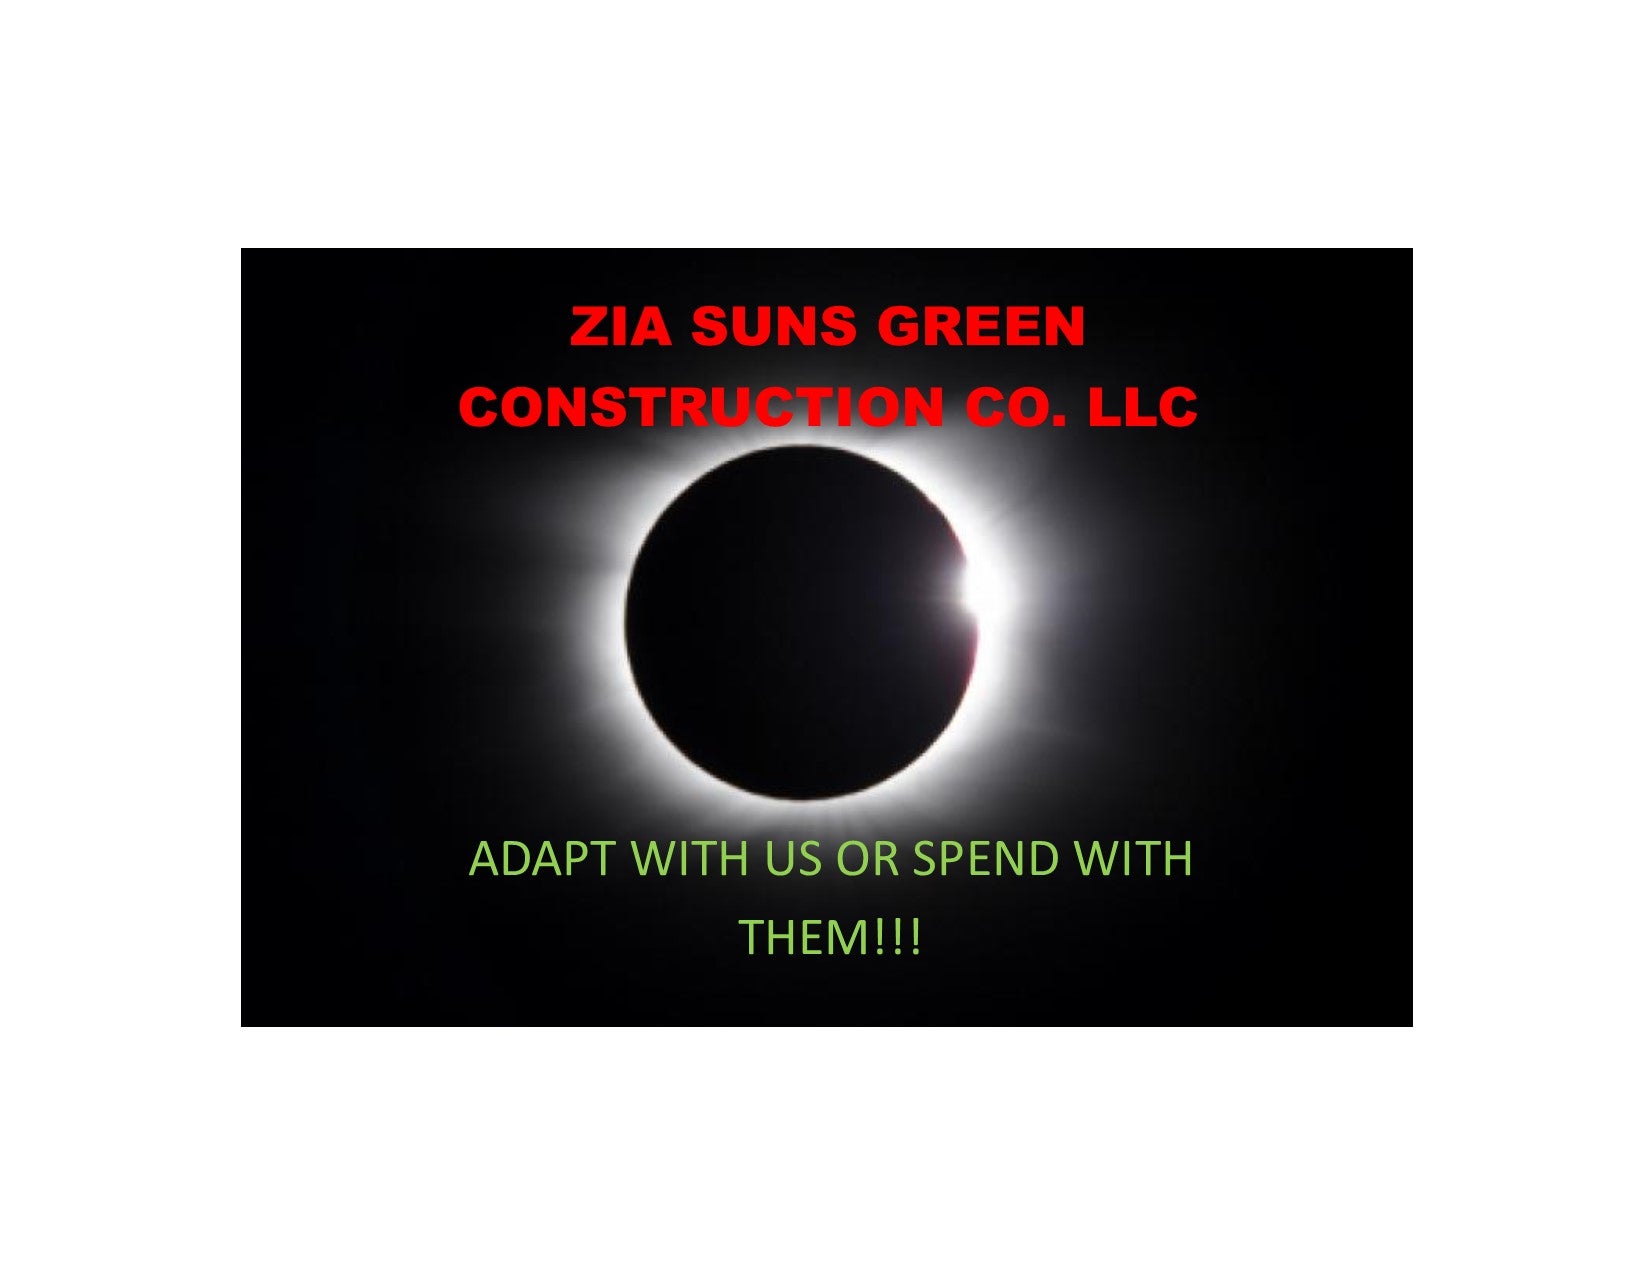 Zia Suns Green Construction Co. LLC